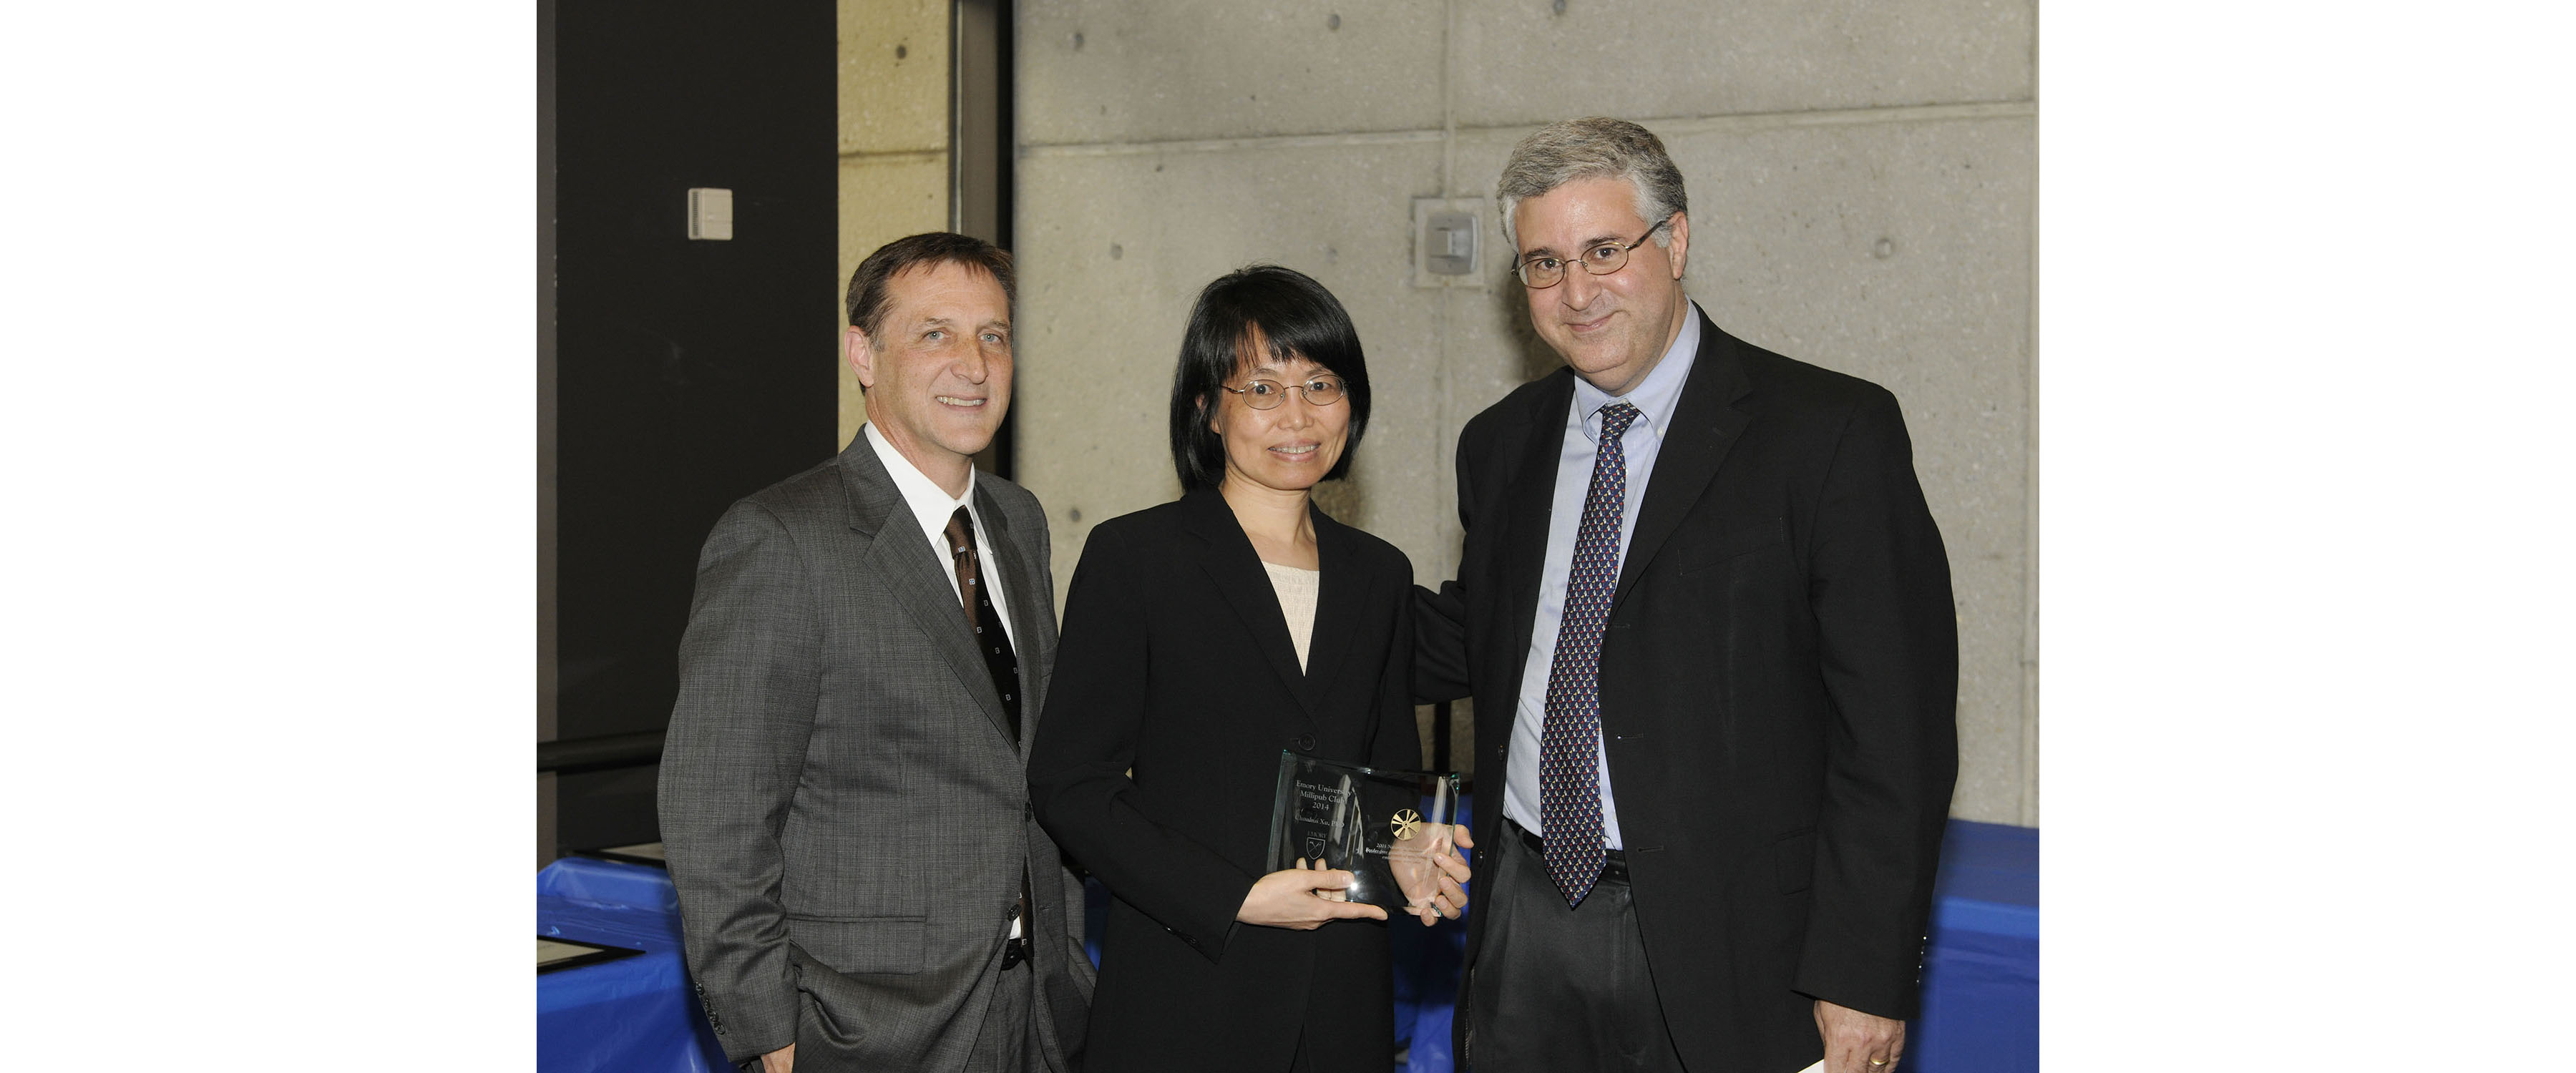 Dr. Chunhui Xu received the MilliPub Award Carousel Photo